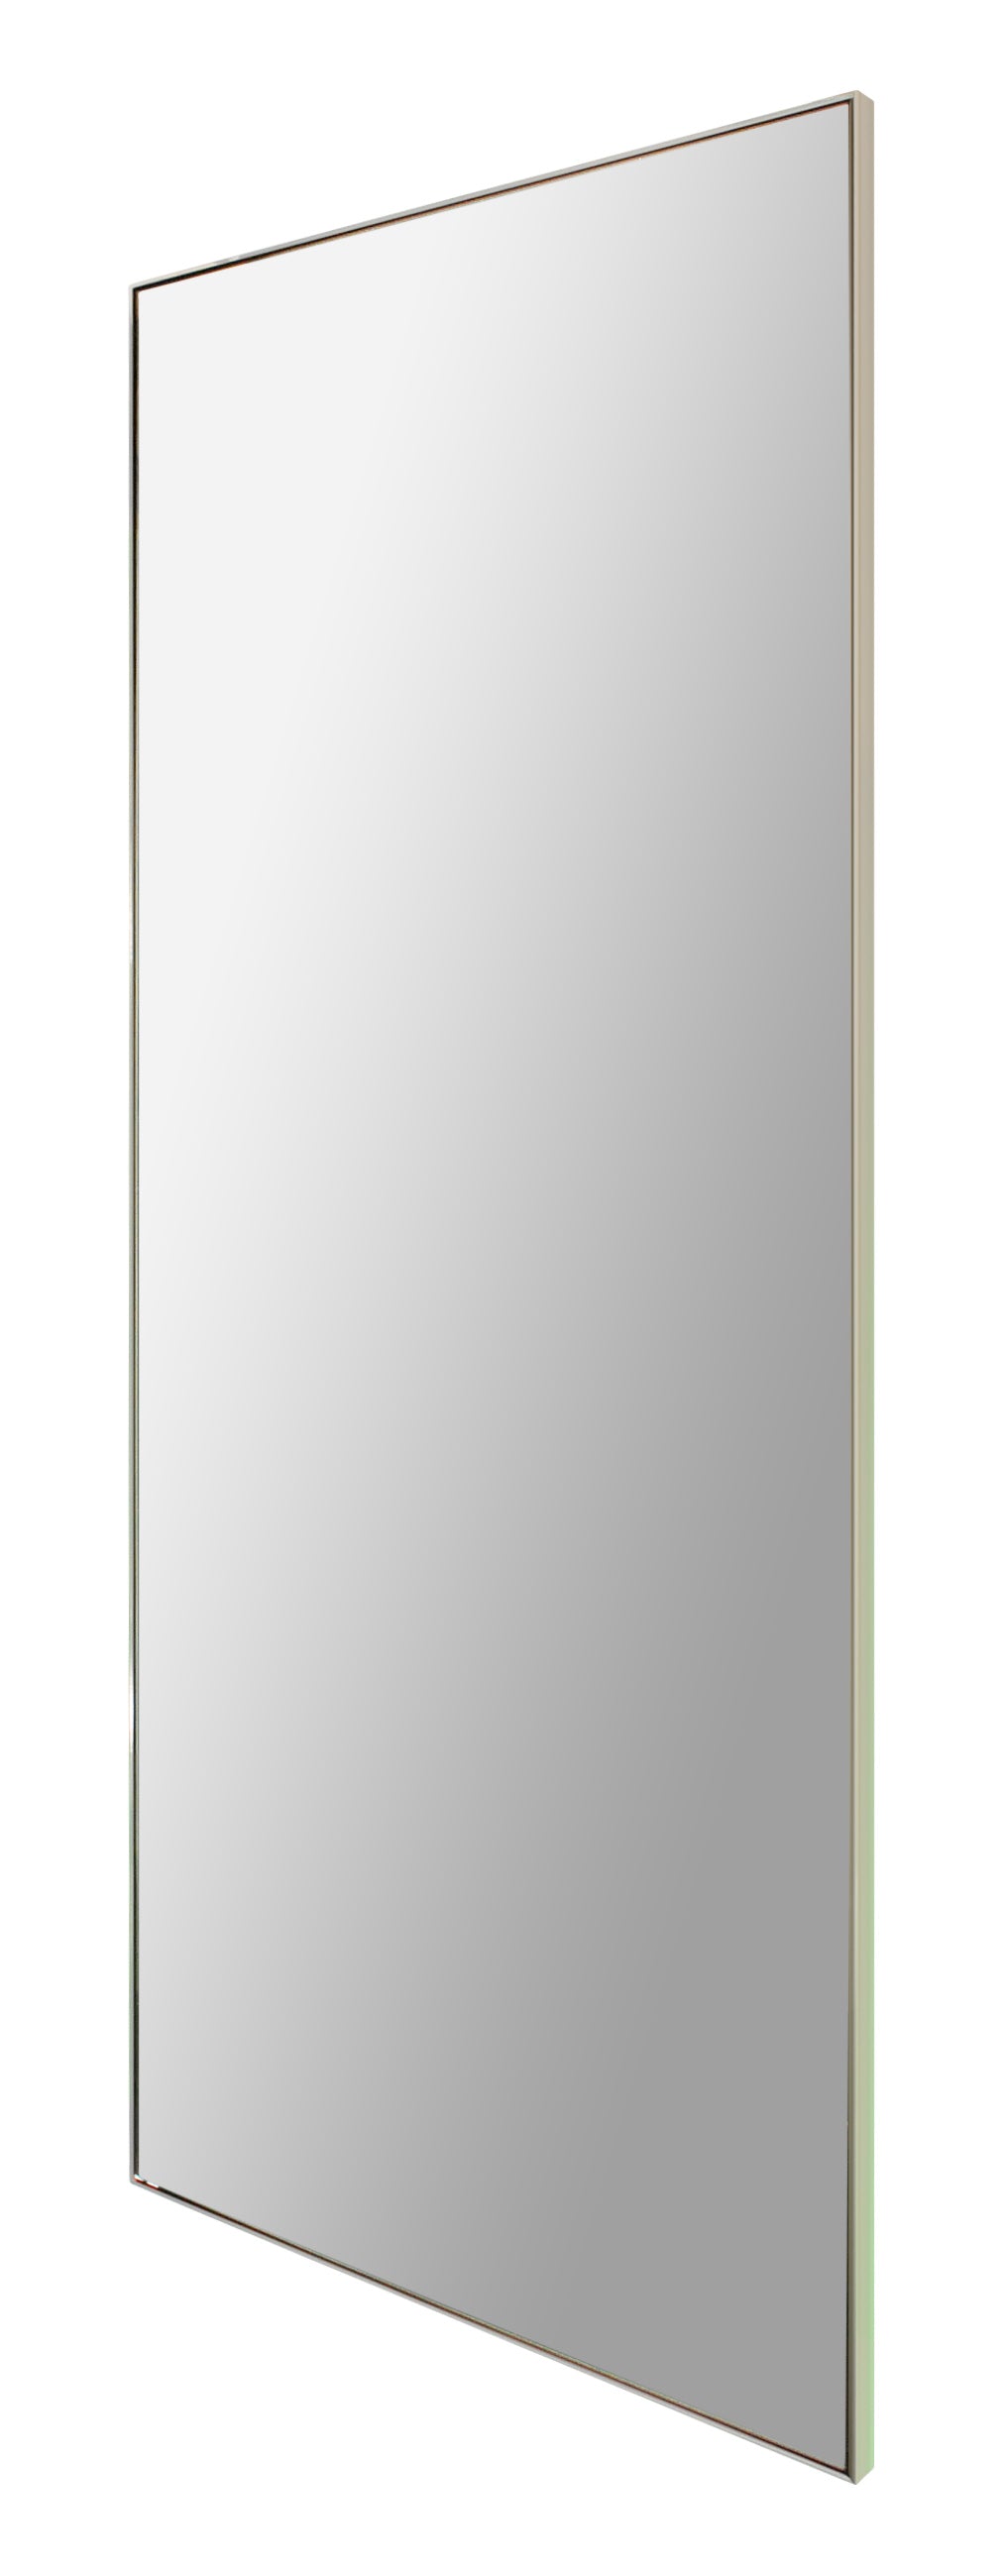 Polished chrome full length mirror